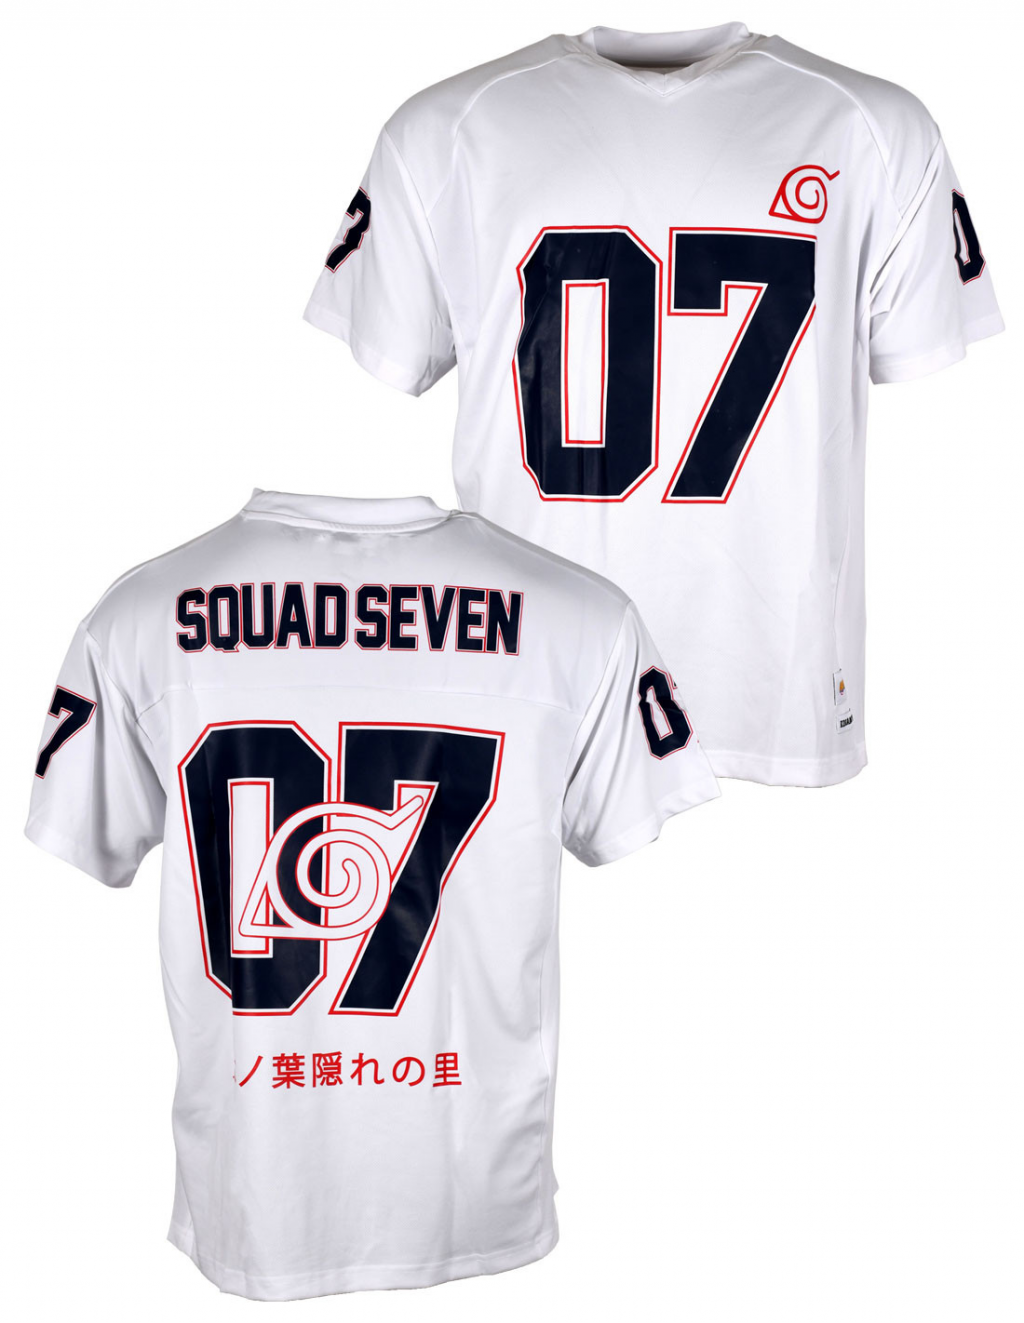 NARUTO - Squad Seven - T-Shirt Sports US Replica unisex (XXL)